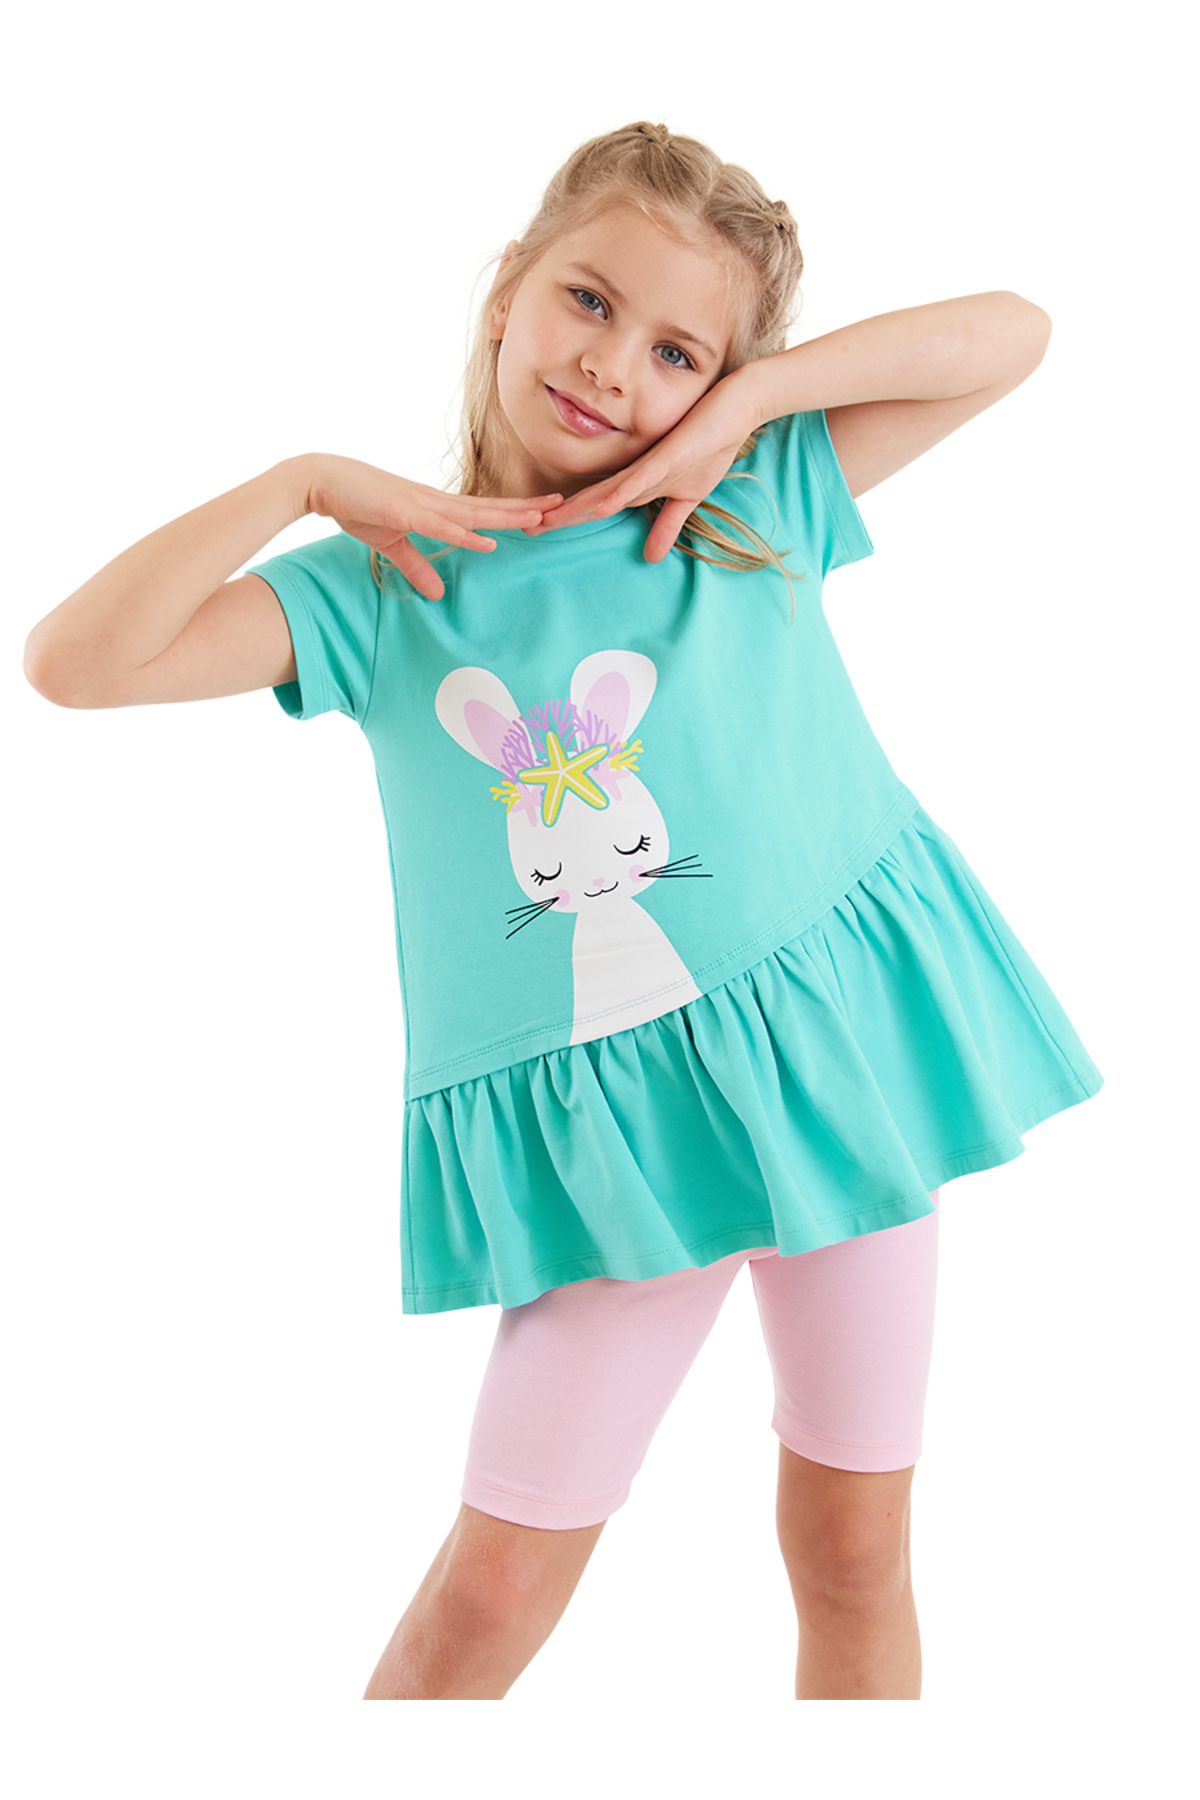 Denokids Sea Bunny Girls T-shirt Leggings Suit